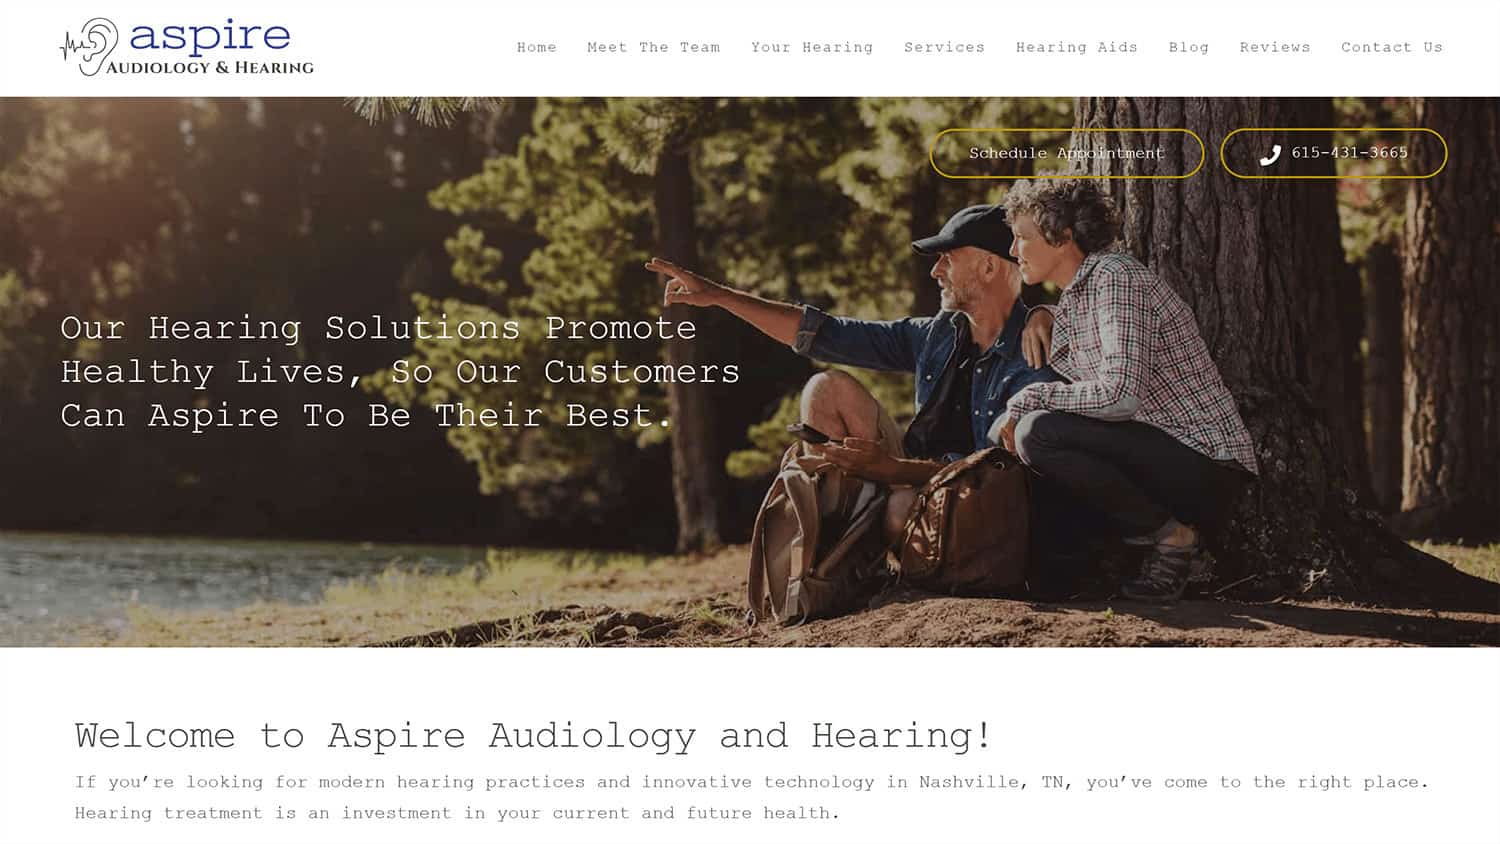 Aspire Audiology & Hearing